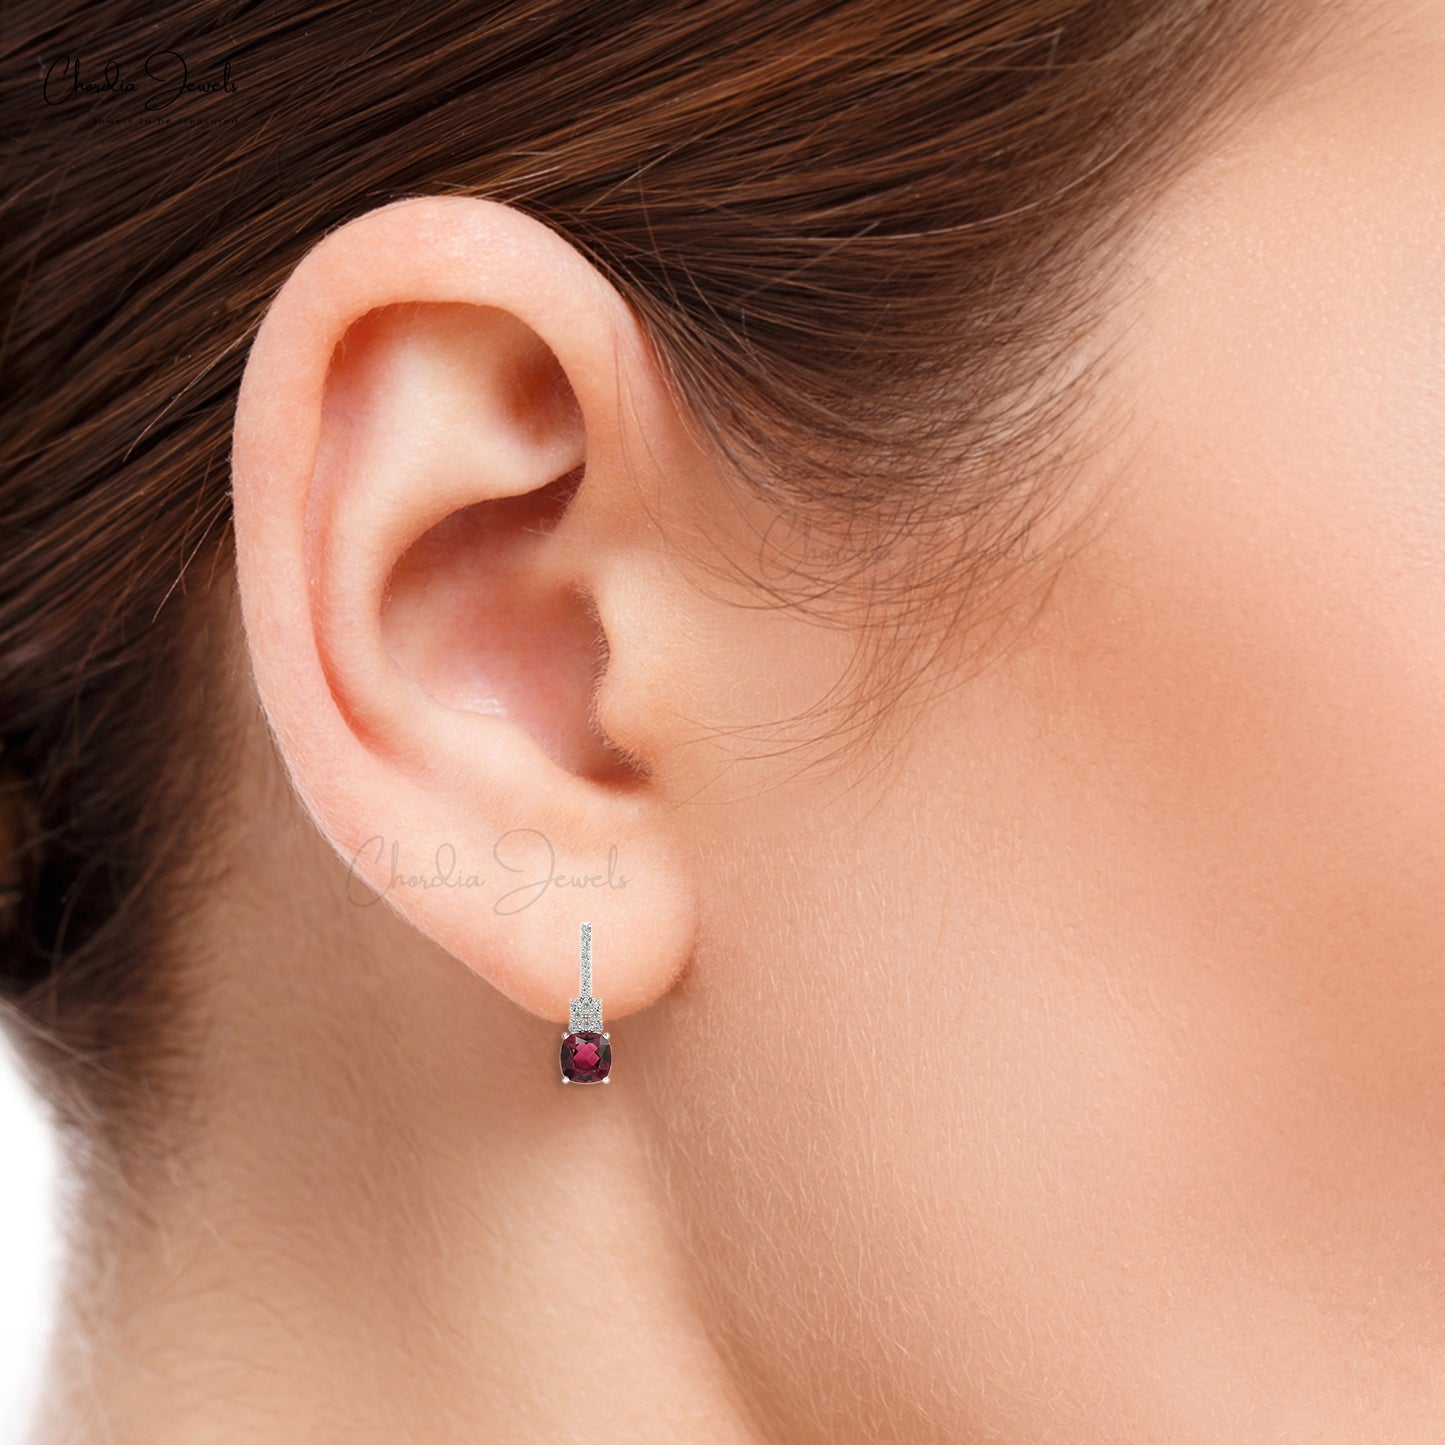 Genuine Pink Tourmaline Diamond Earrings 6mm Cushion Cut Earrings 14k Solid Gold Earrings For Her